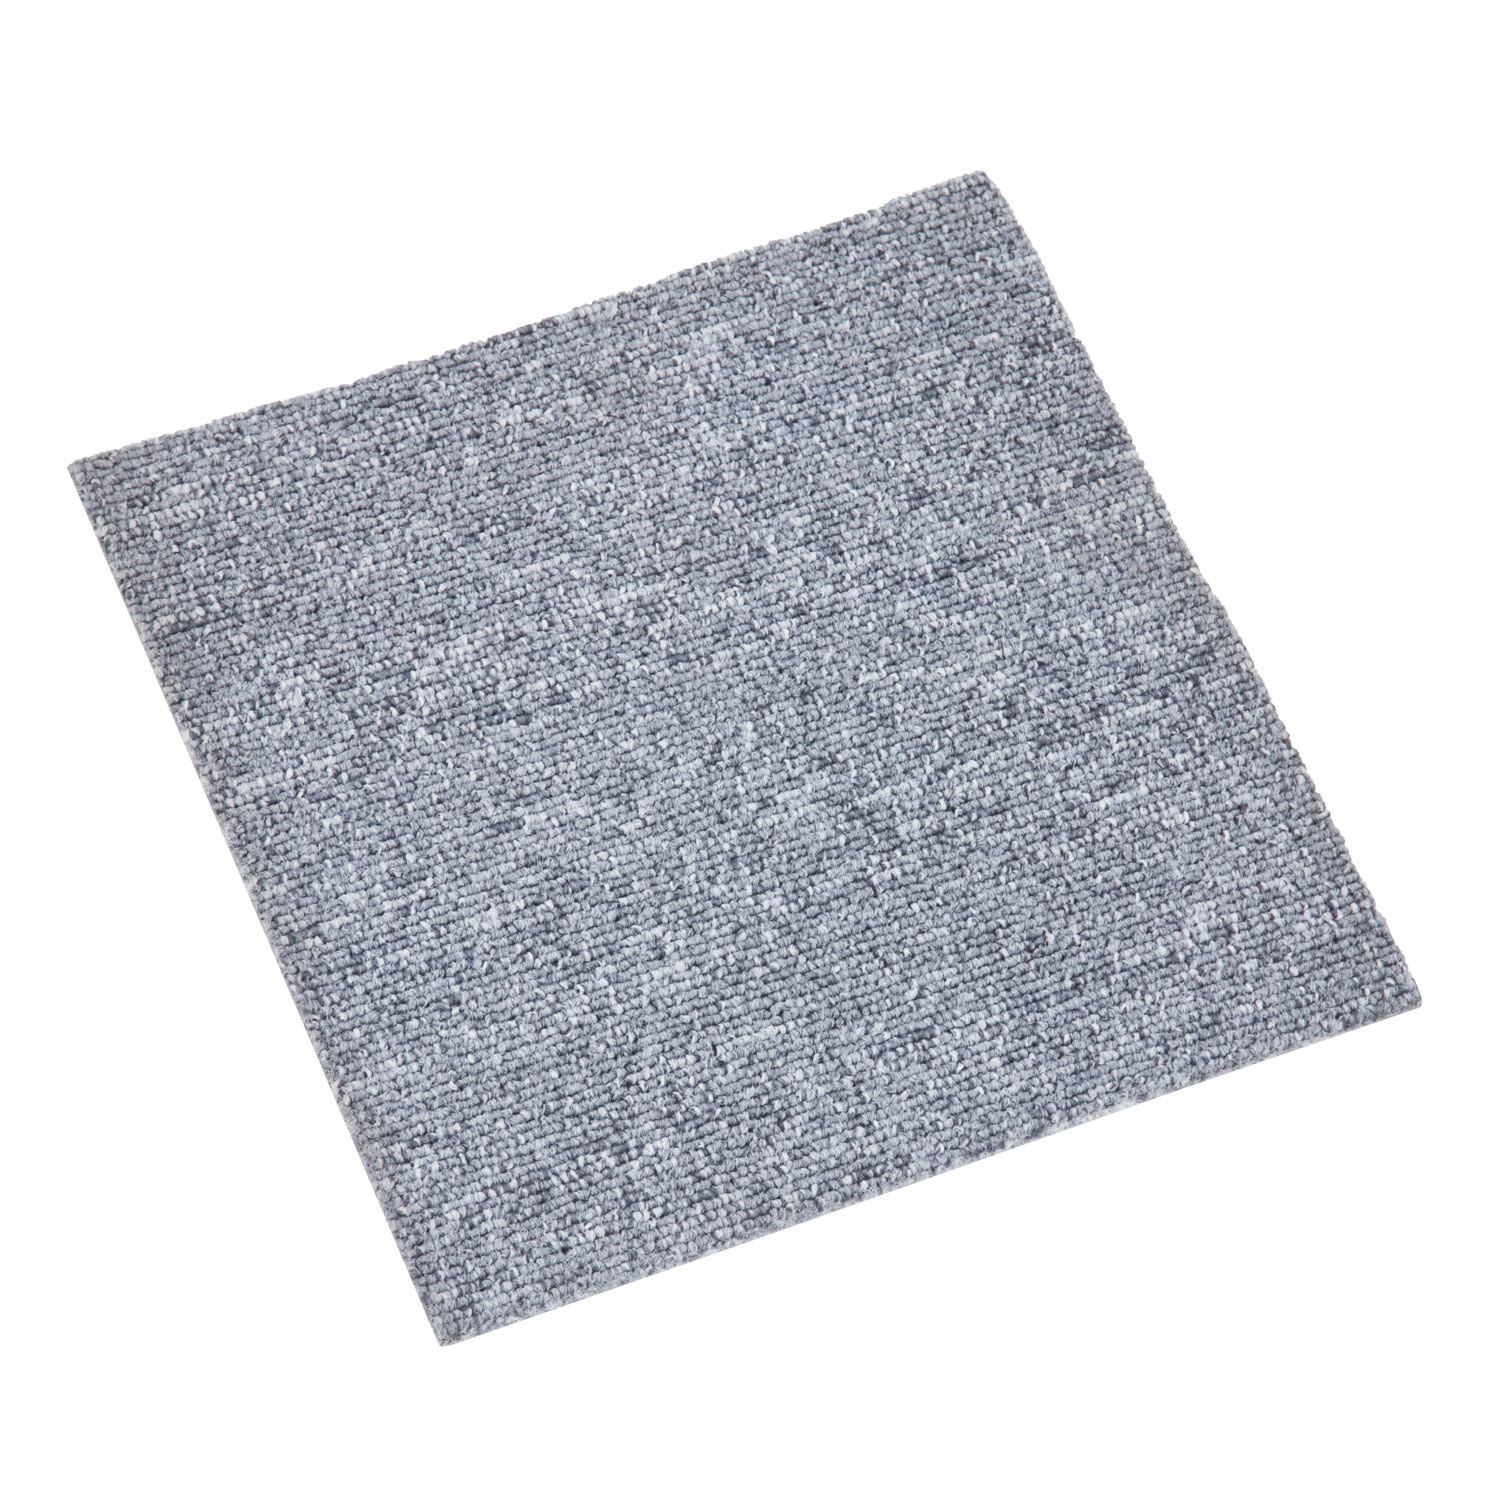 Azulejos de alfombra de calidad impermeable al aire libre